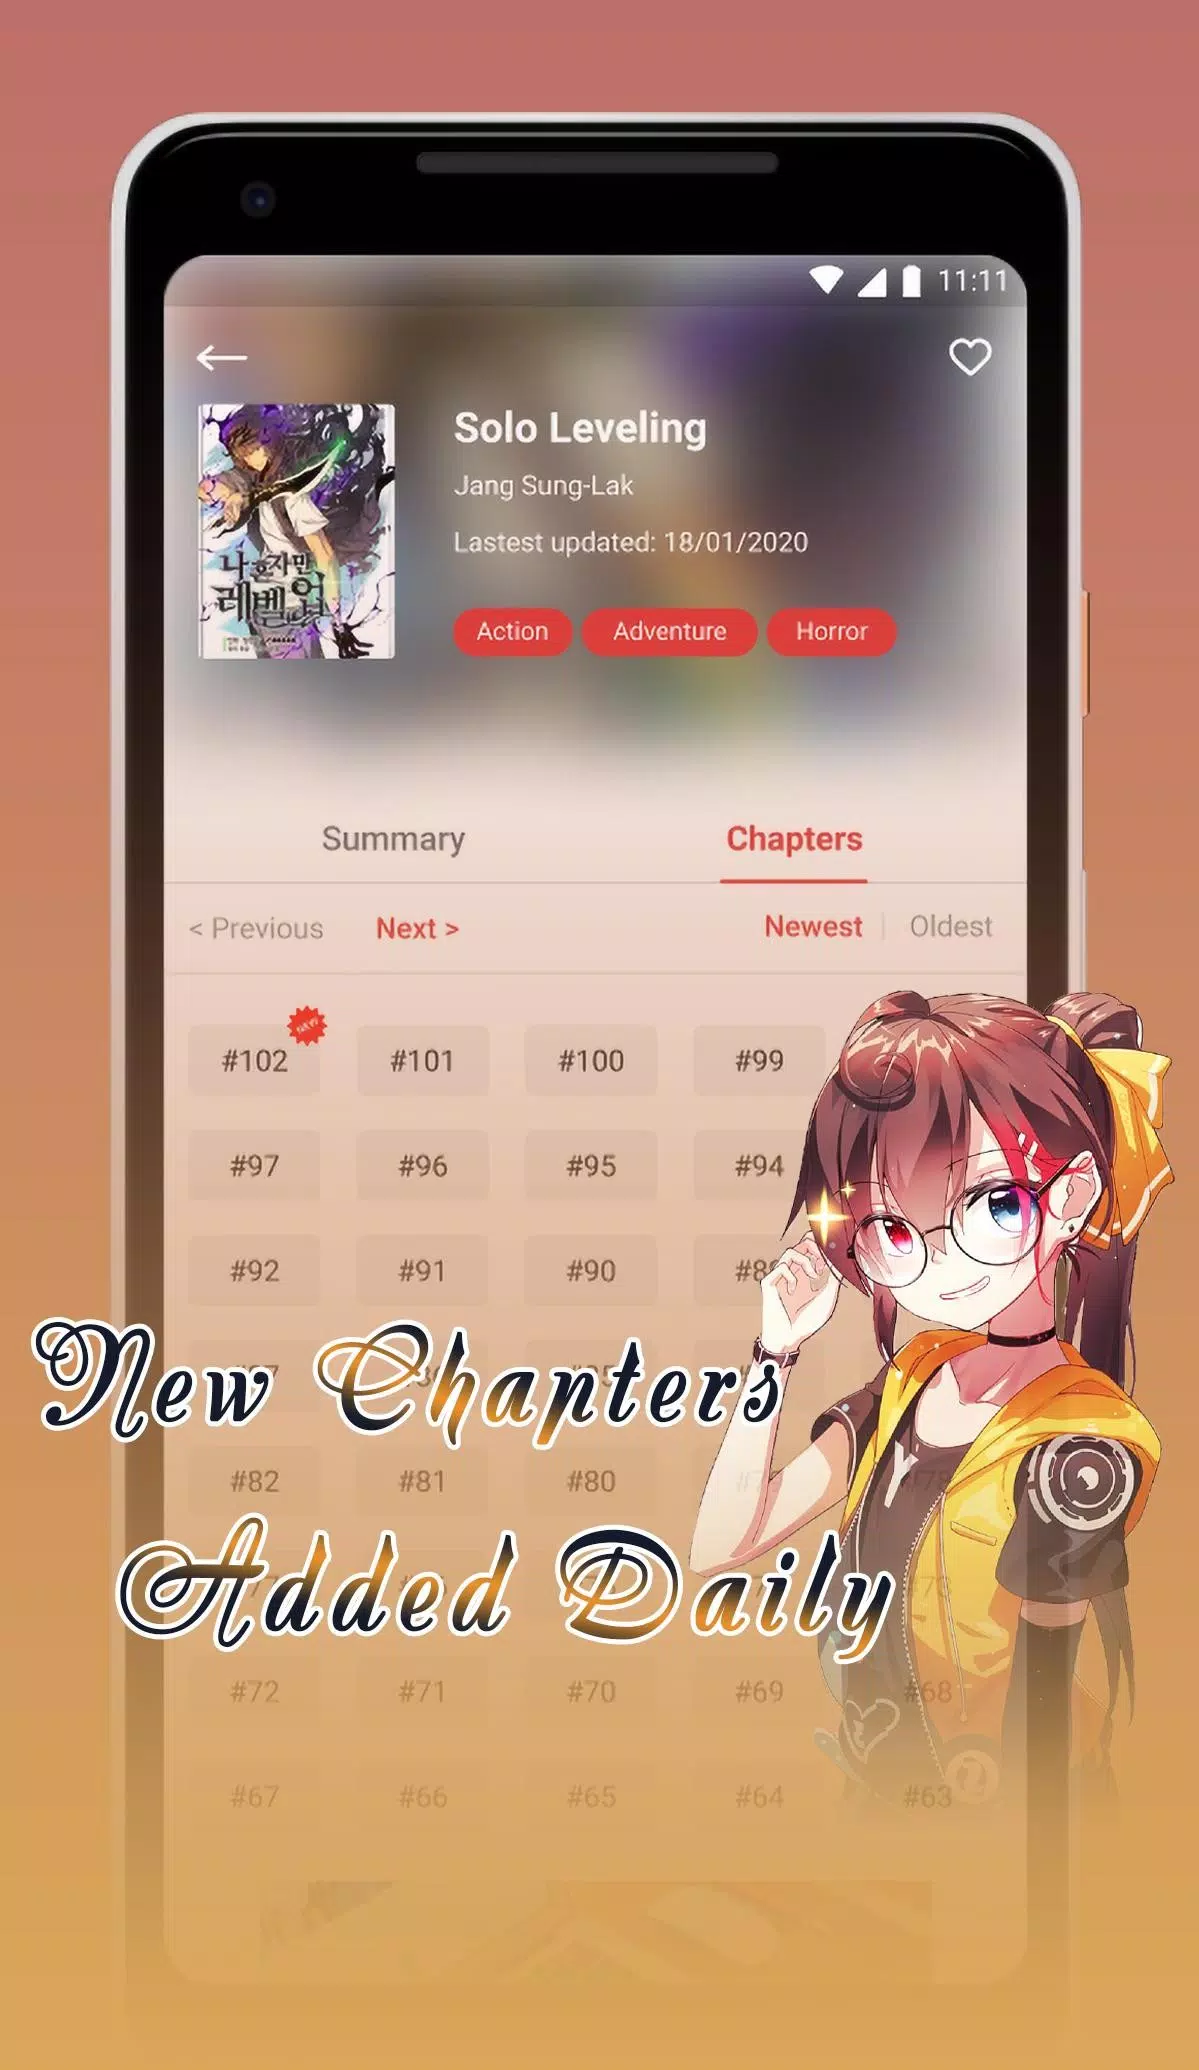 Download do APK de Mangakakalot - Read manga online free para Android